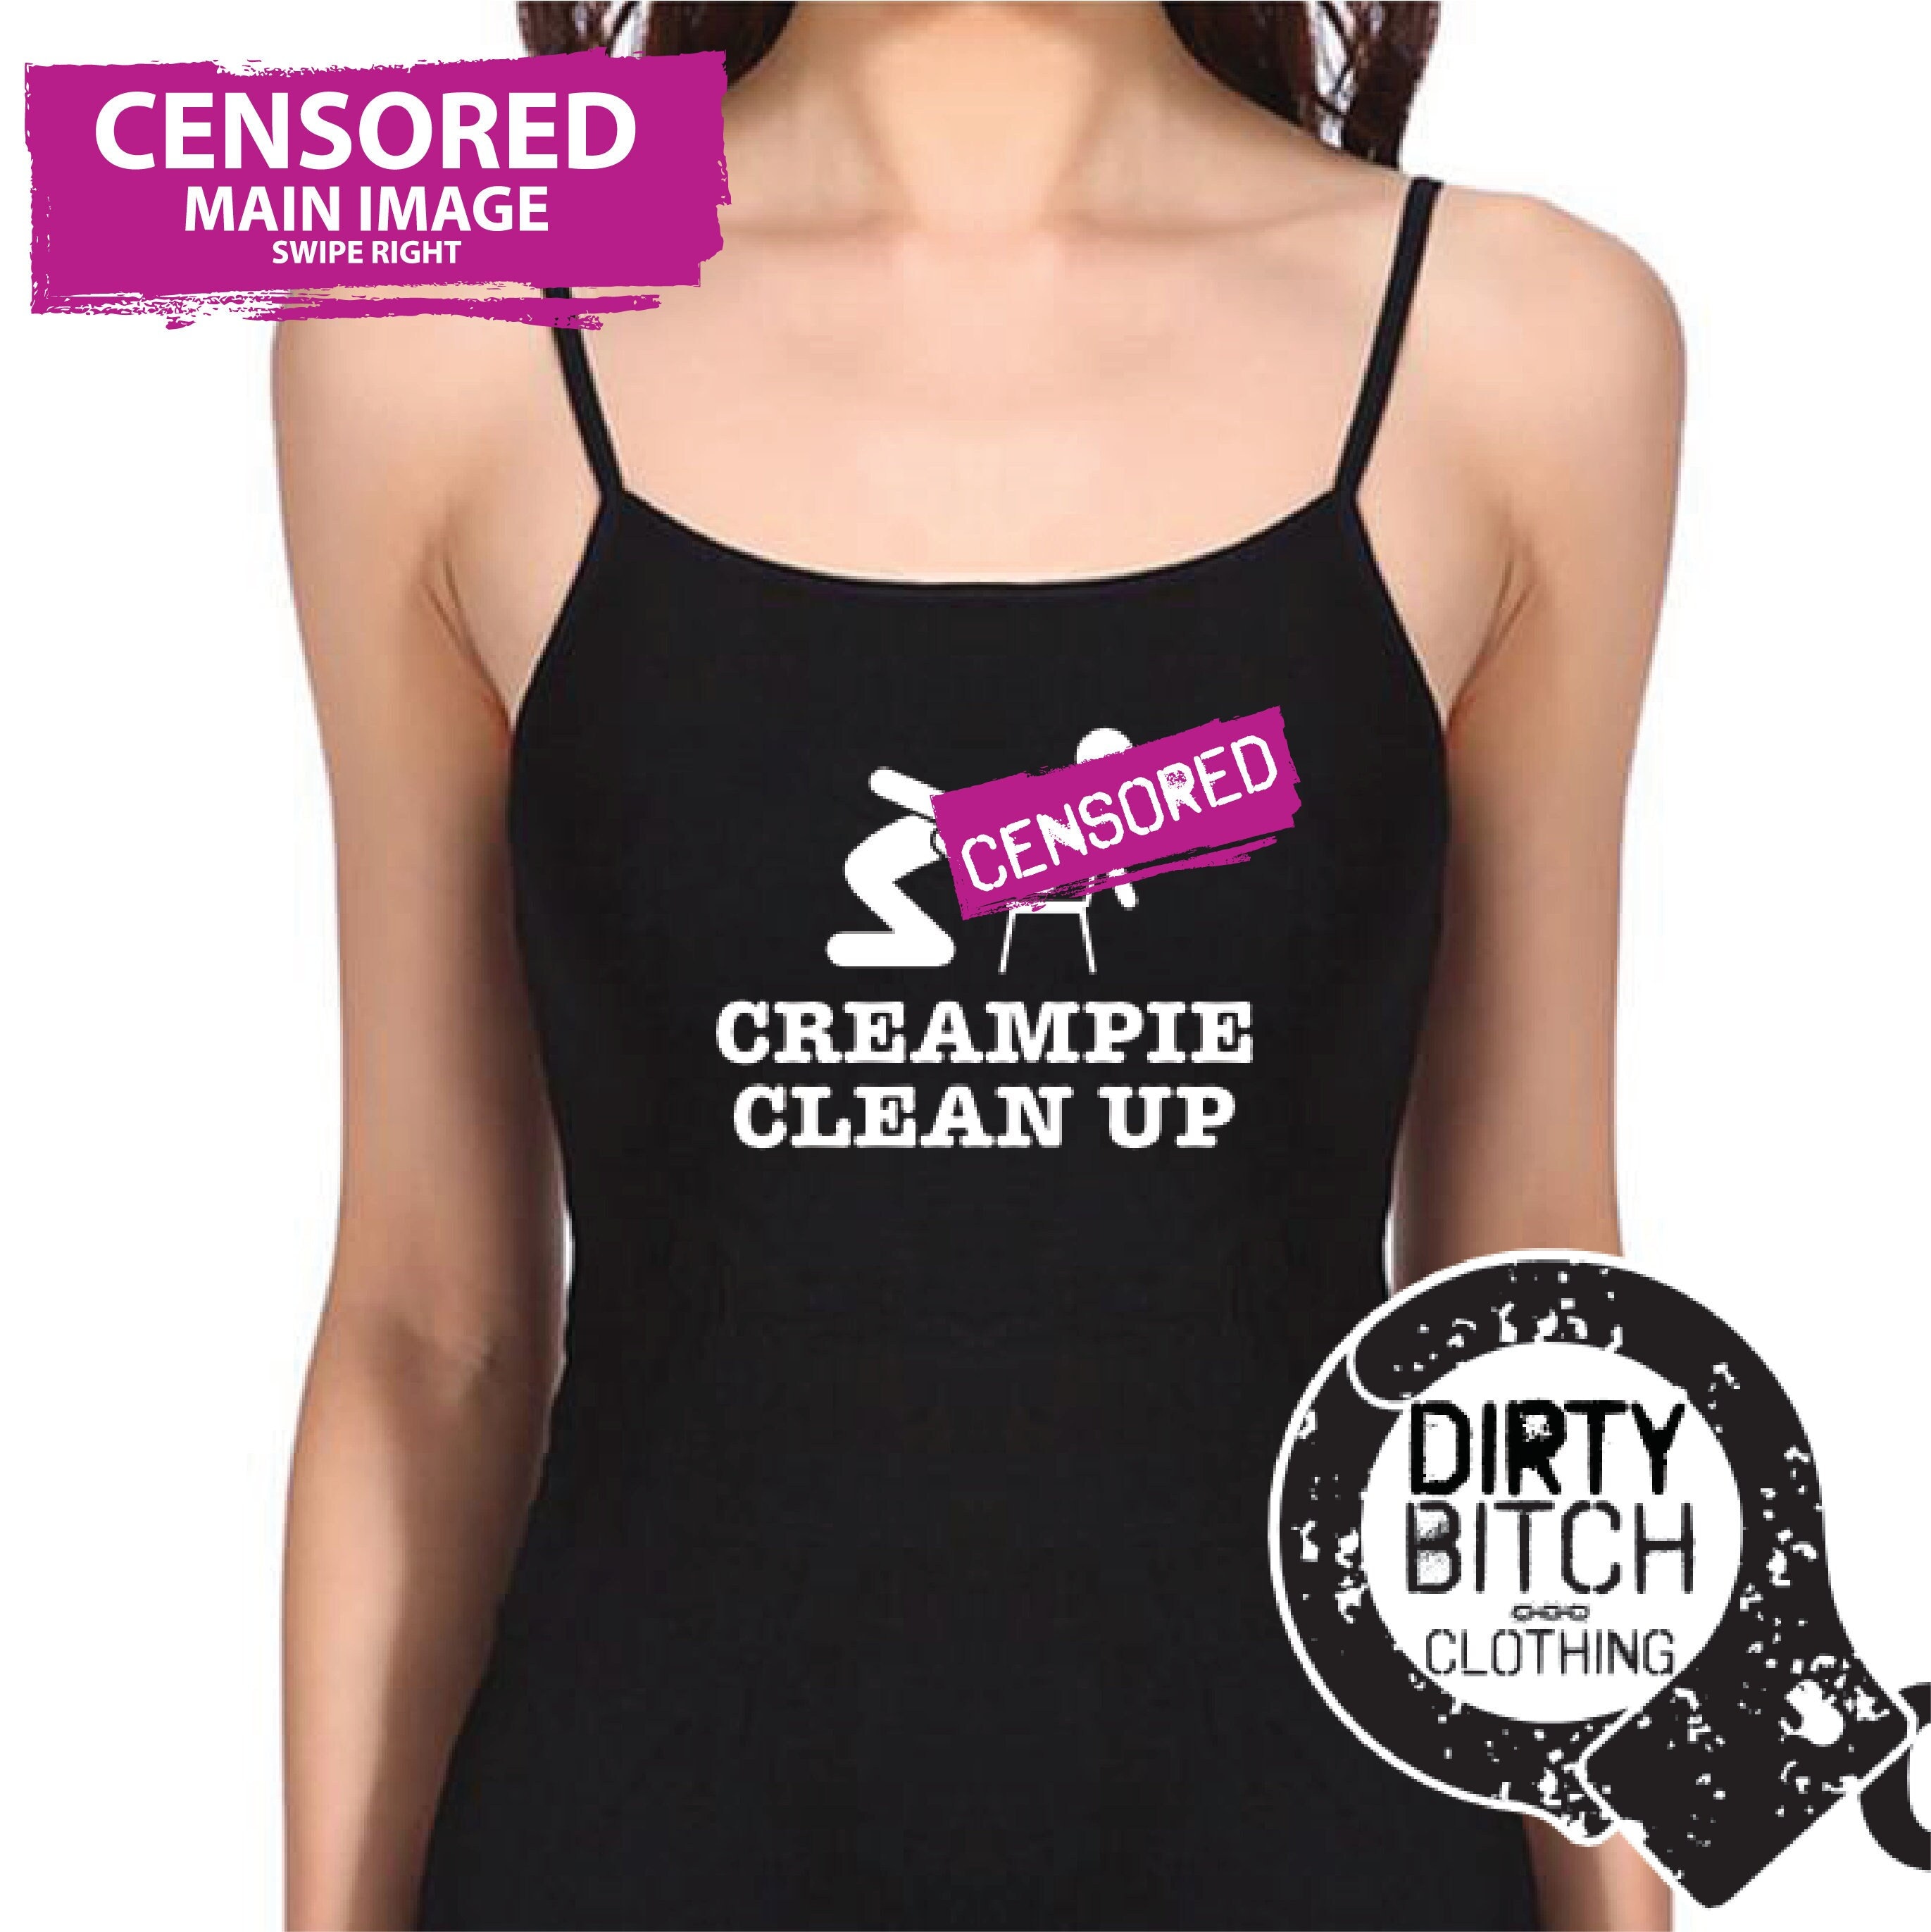 Creampie Clean up Adult Vest Top Clothing Fetish Bdsm photo